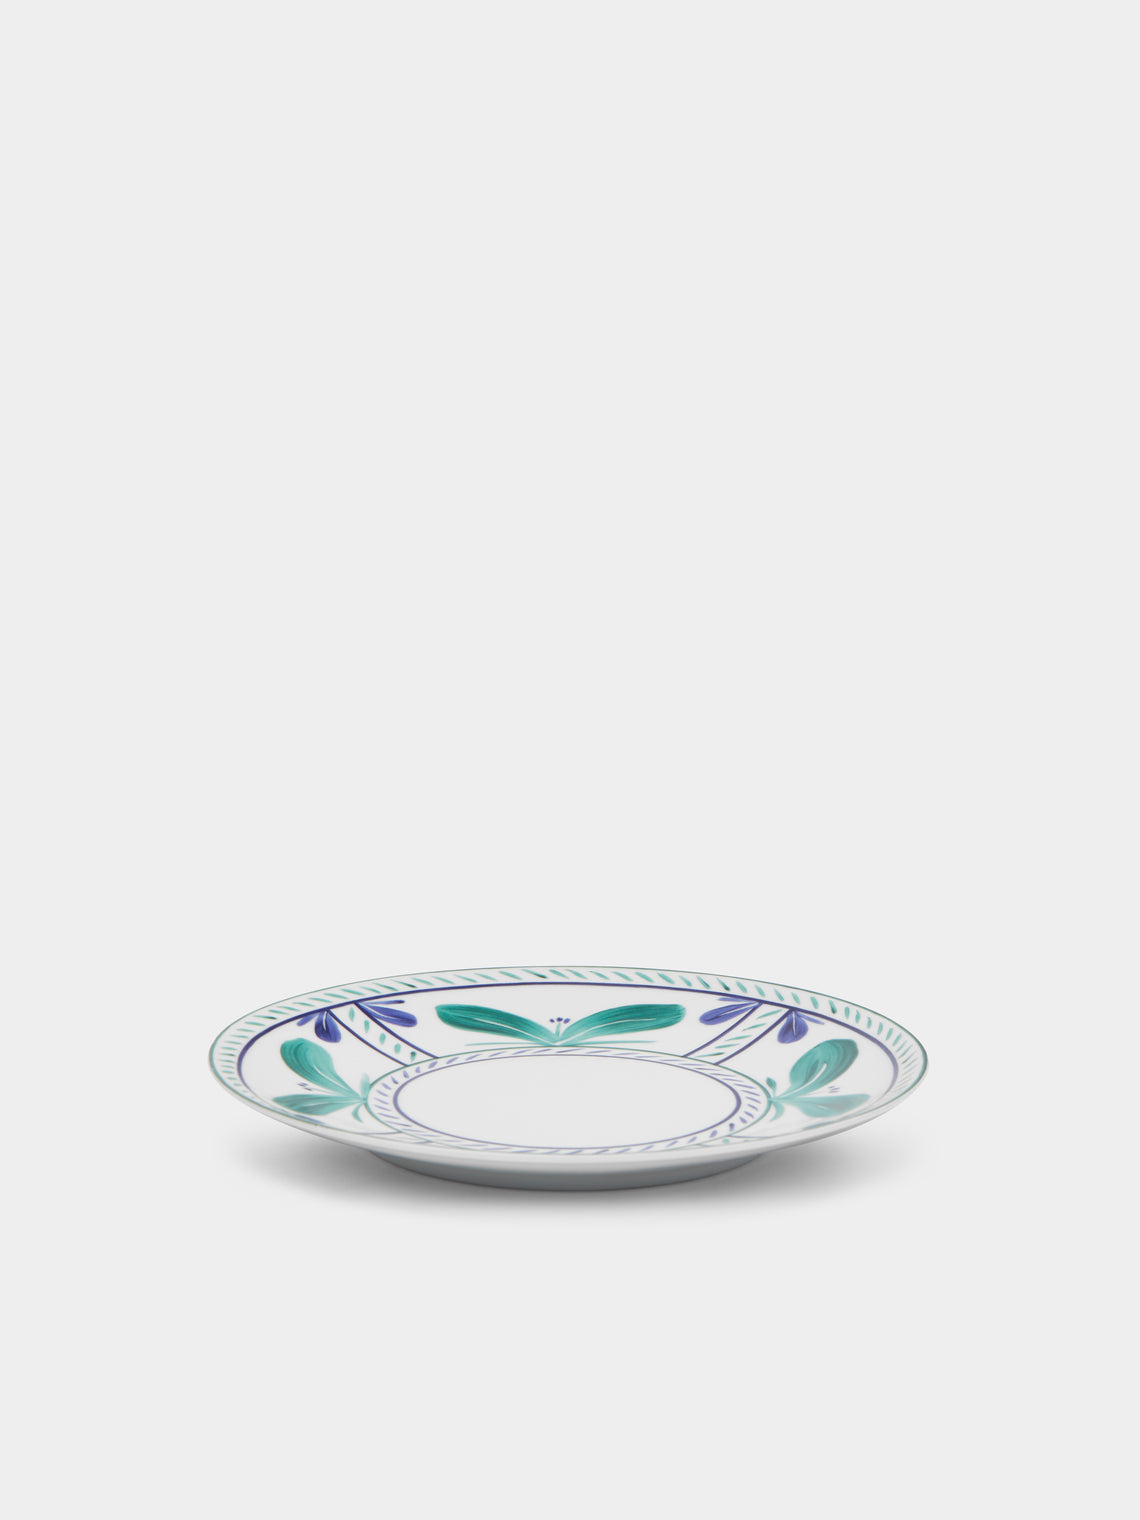 Molecot - Sevilla Porcelain Dessert Plates (Set of 4) -  - ABASK